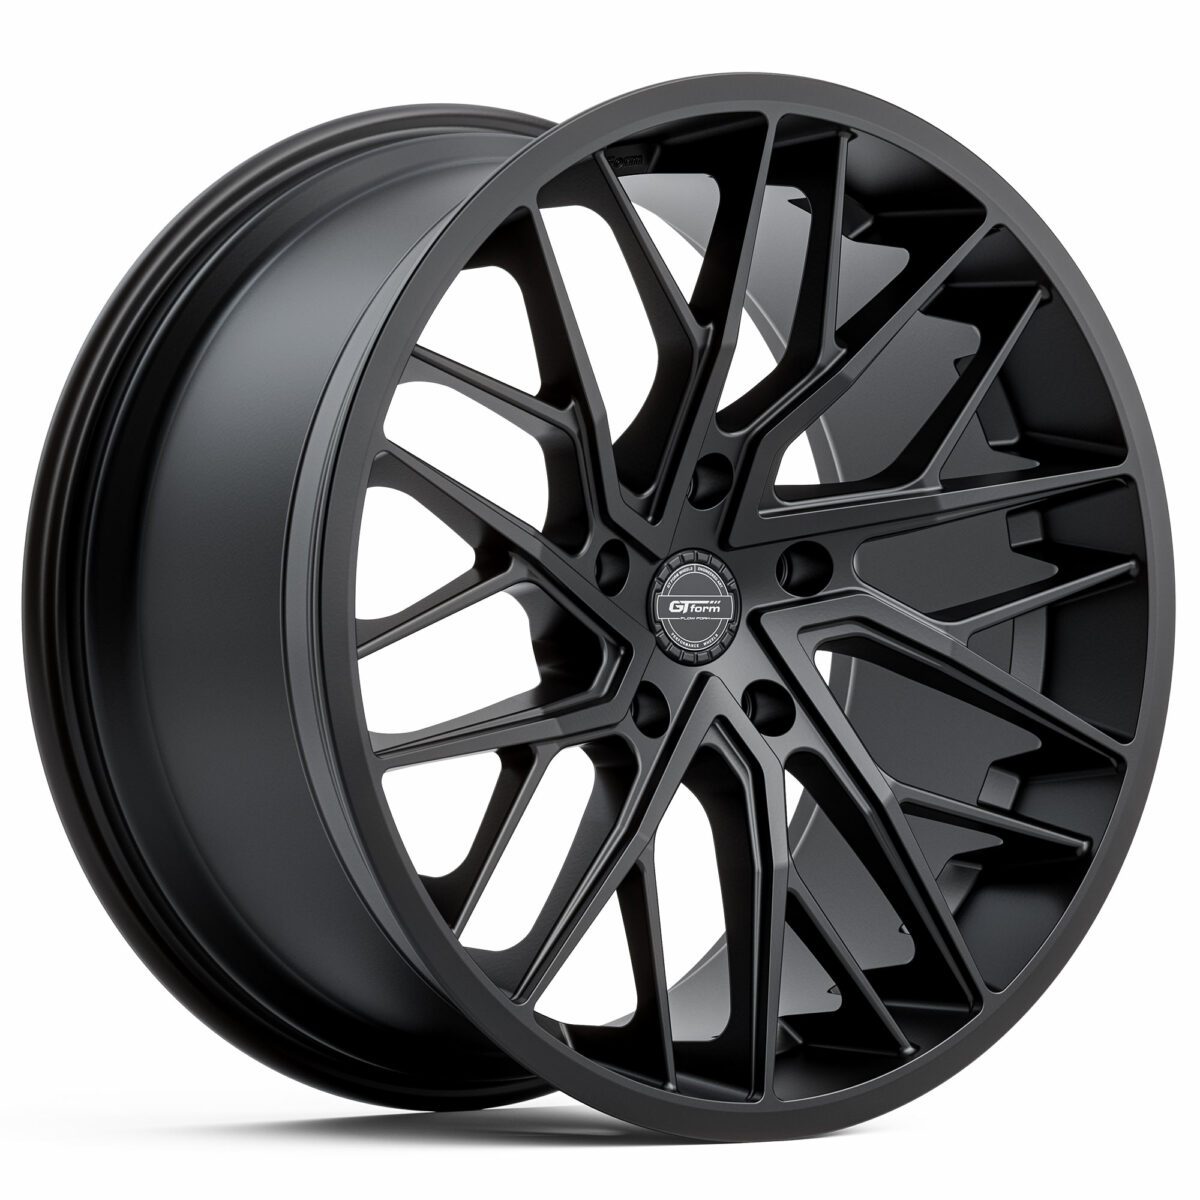 GT Form Vertex Satin Black Staggered Rims 20 inch Performance Wheels